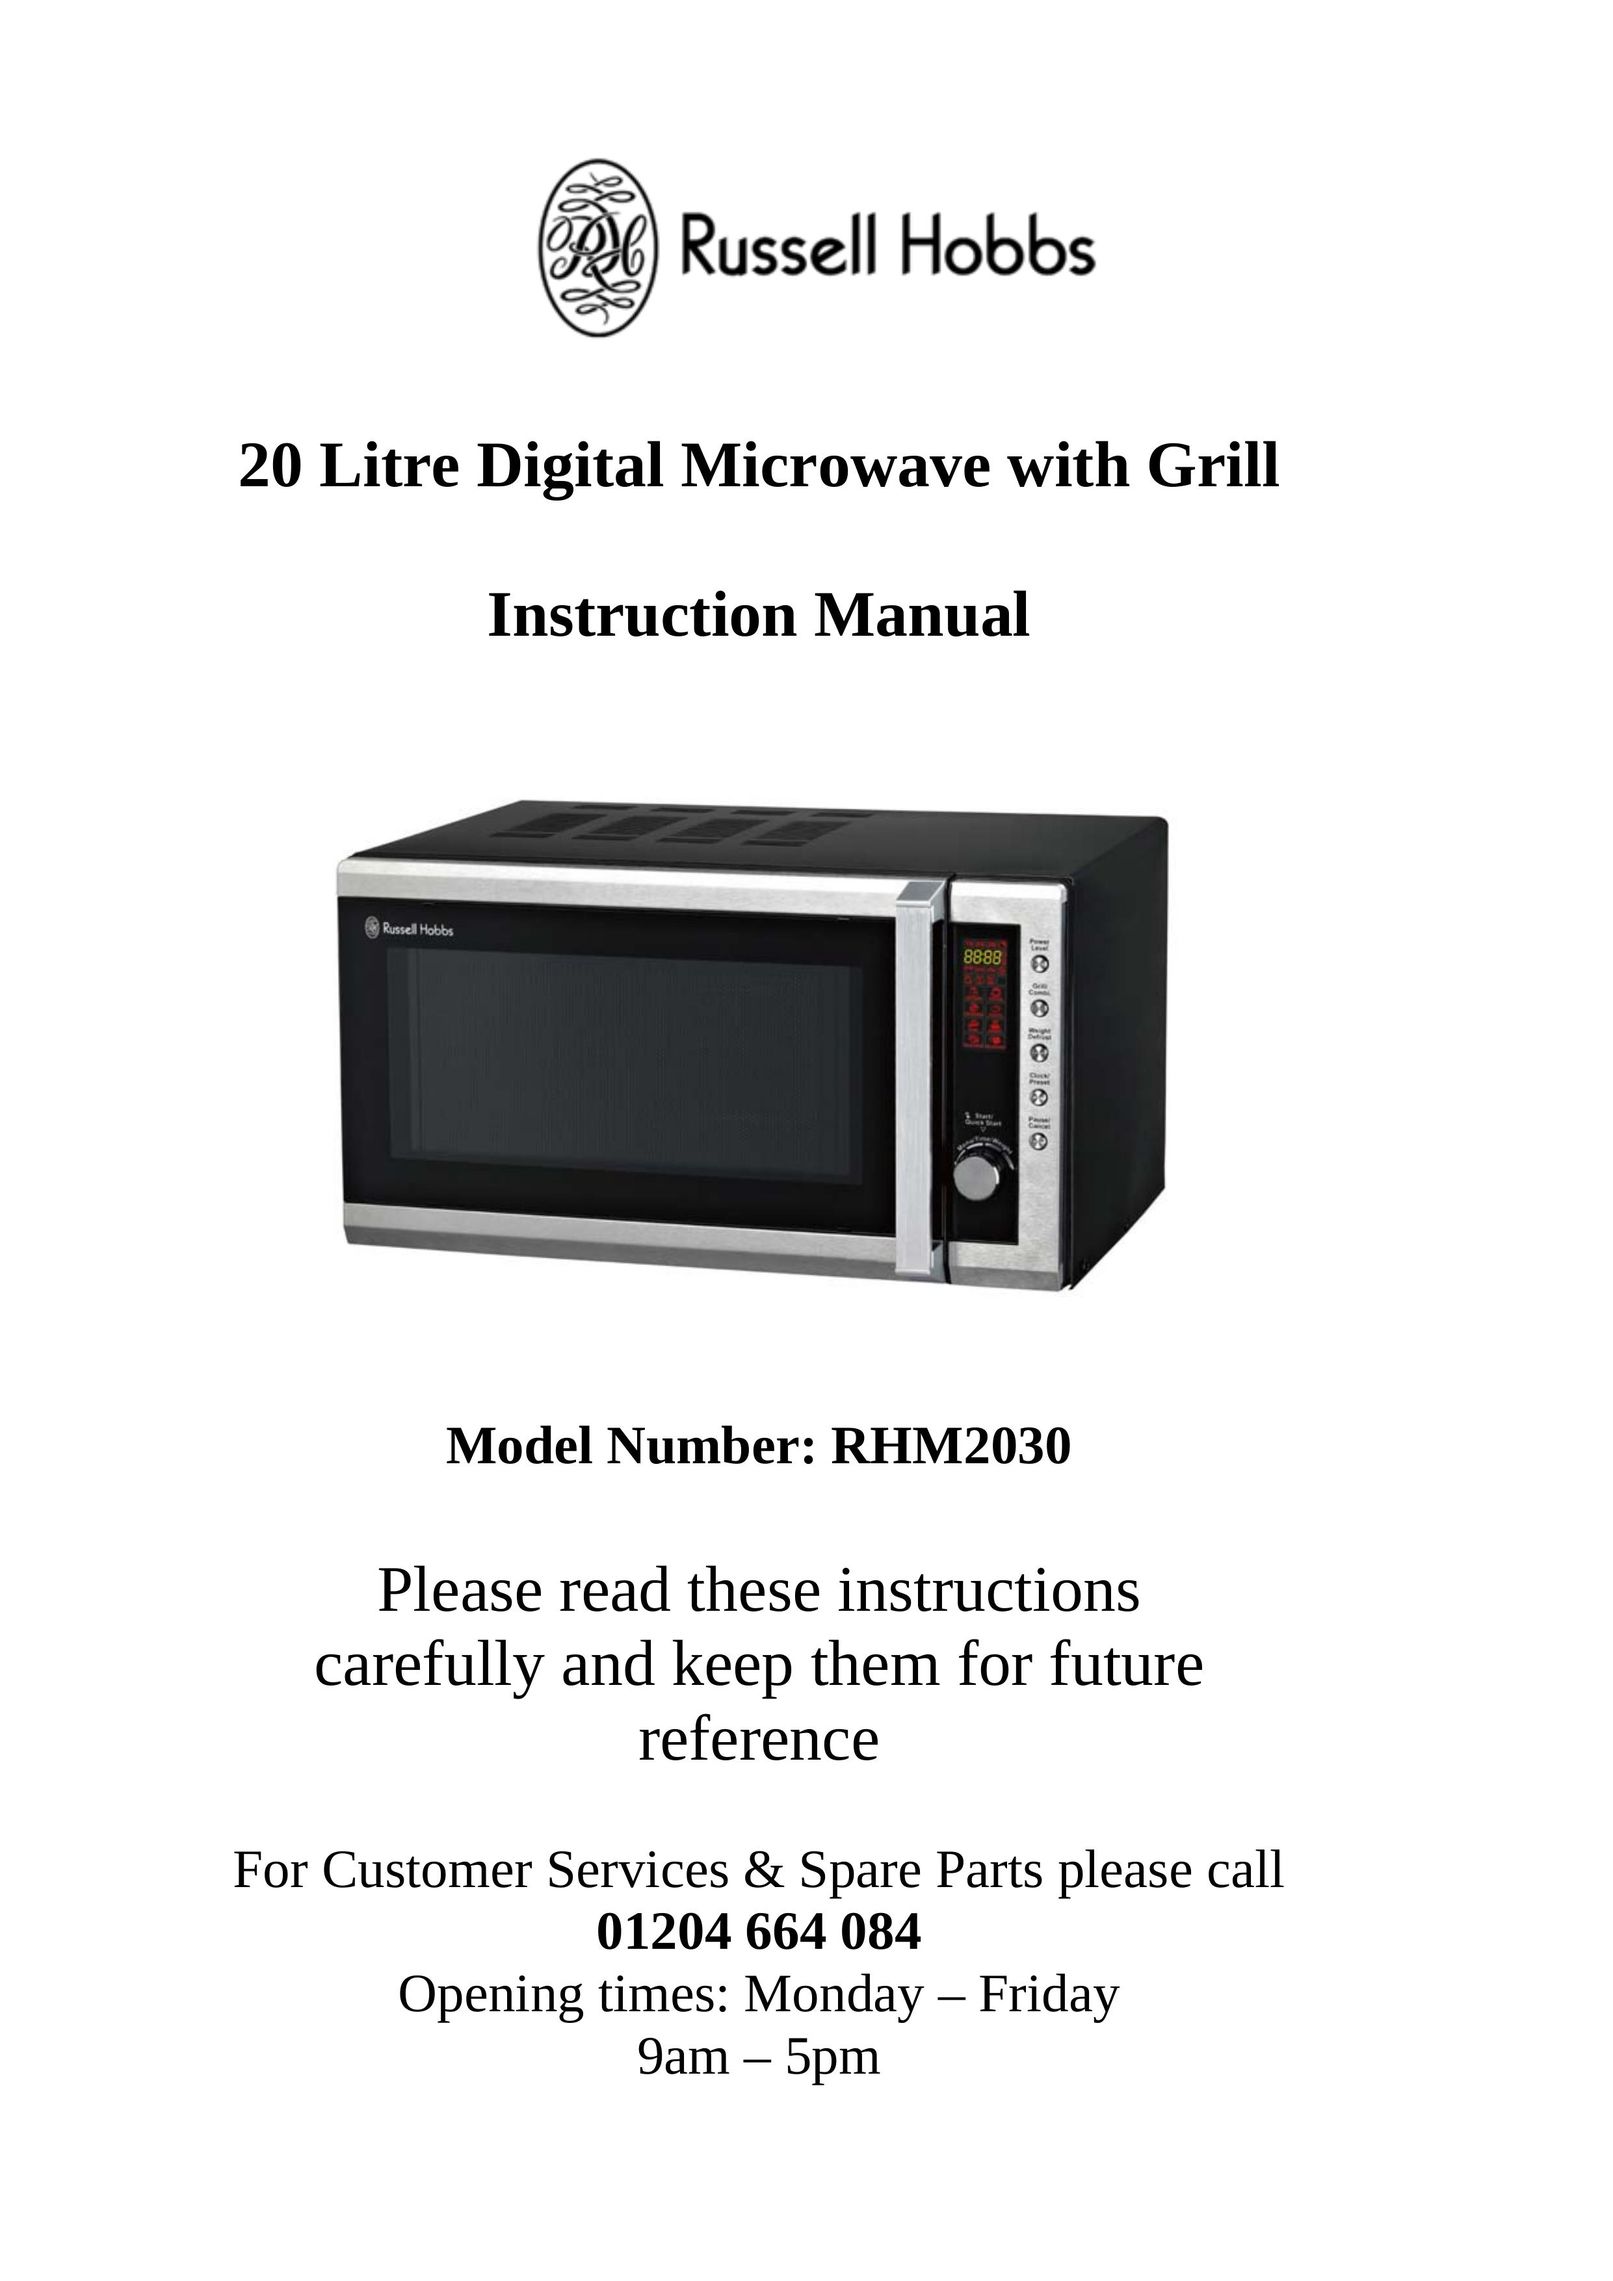 Russell Hobbs RHM2030 Microwave Oven User Manual